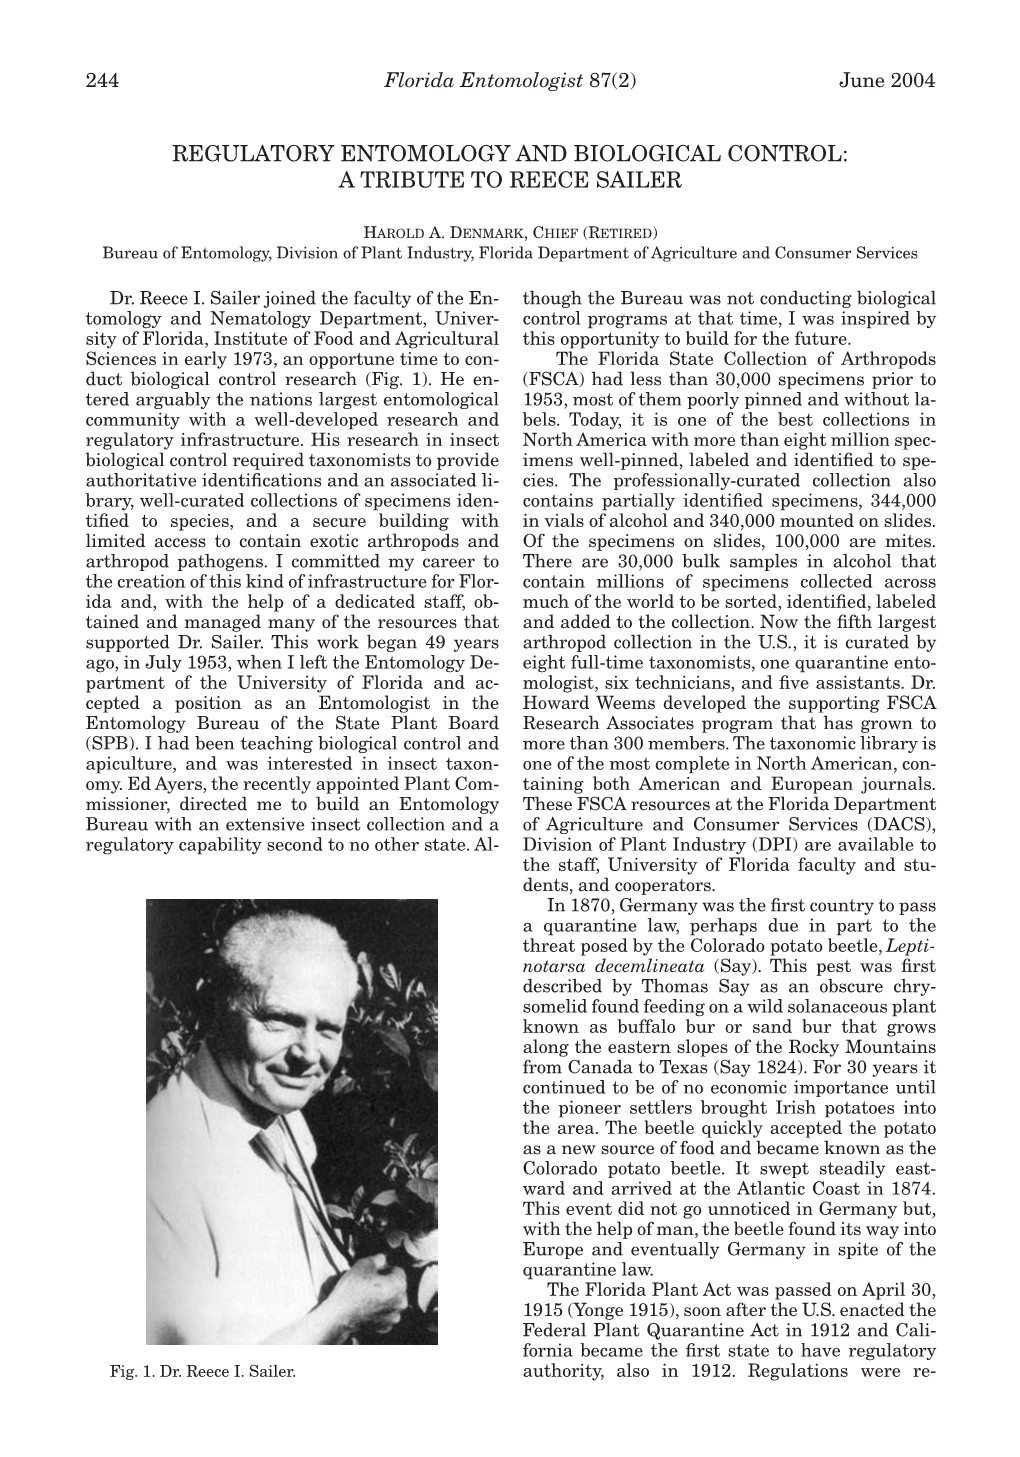 Regulatory Entomology and Biological Control: a Tribute to Reece Sailer